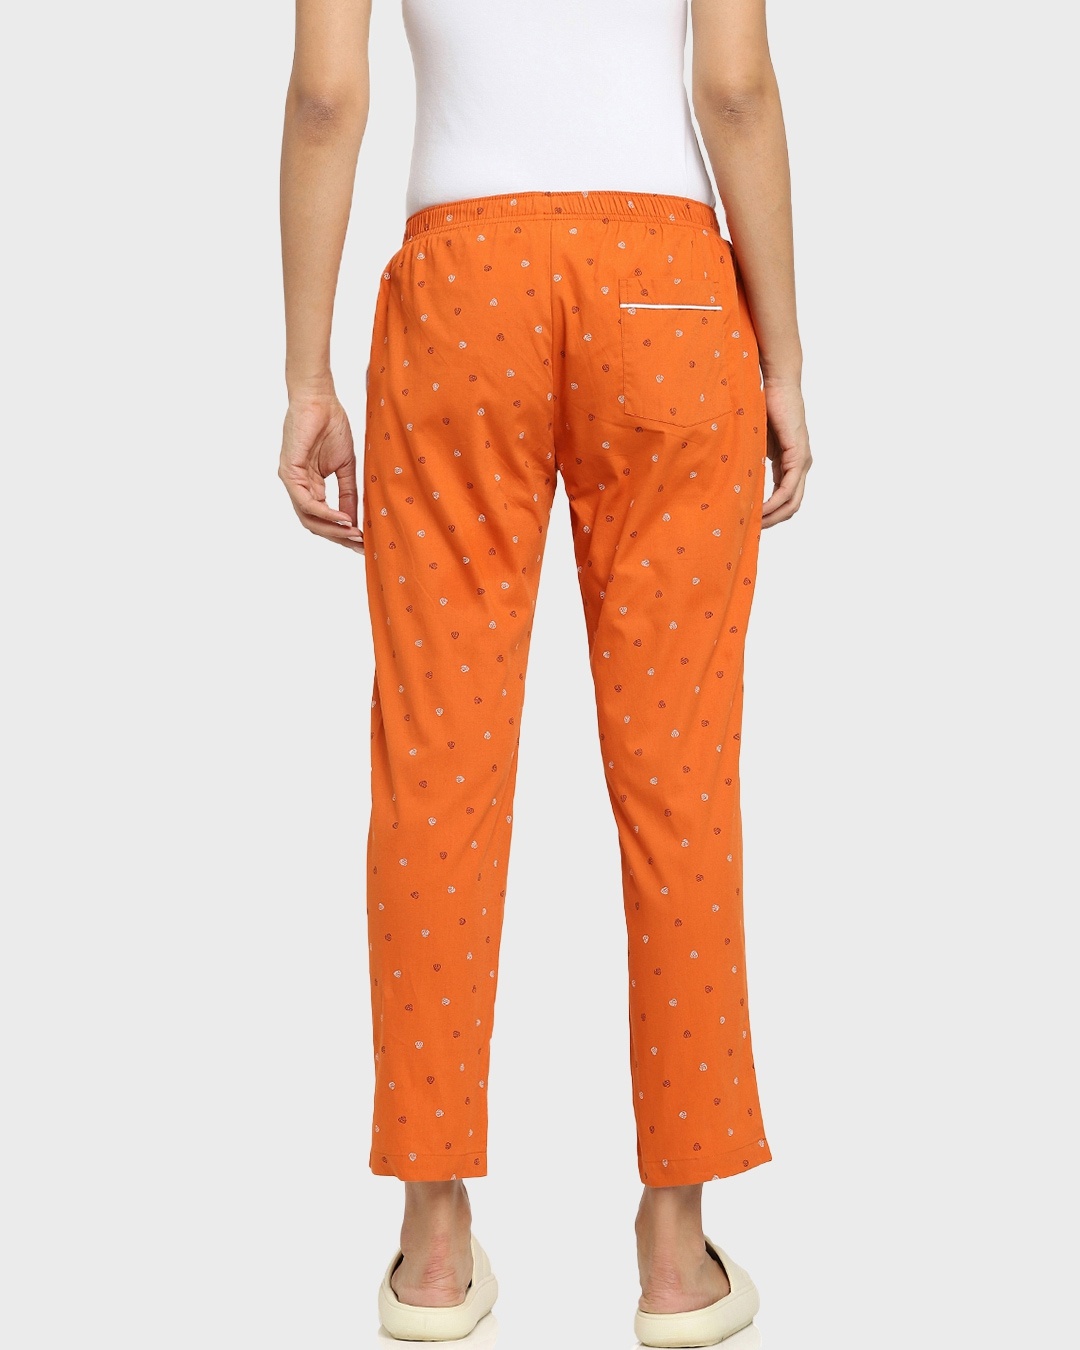 Shop Orange AOP Geometric Print E Pyjama-Design